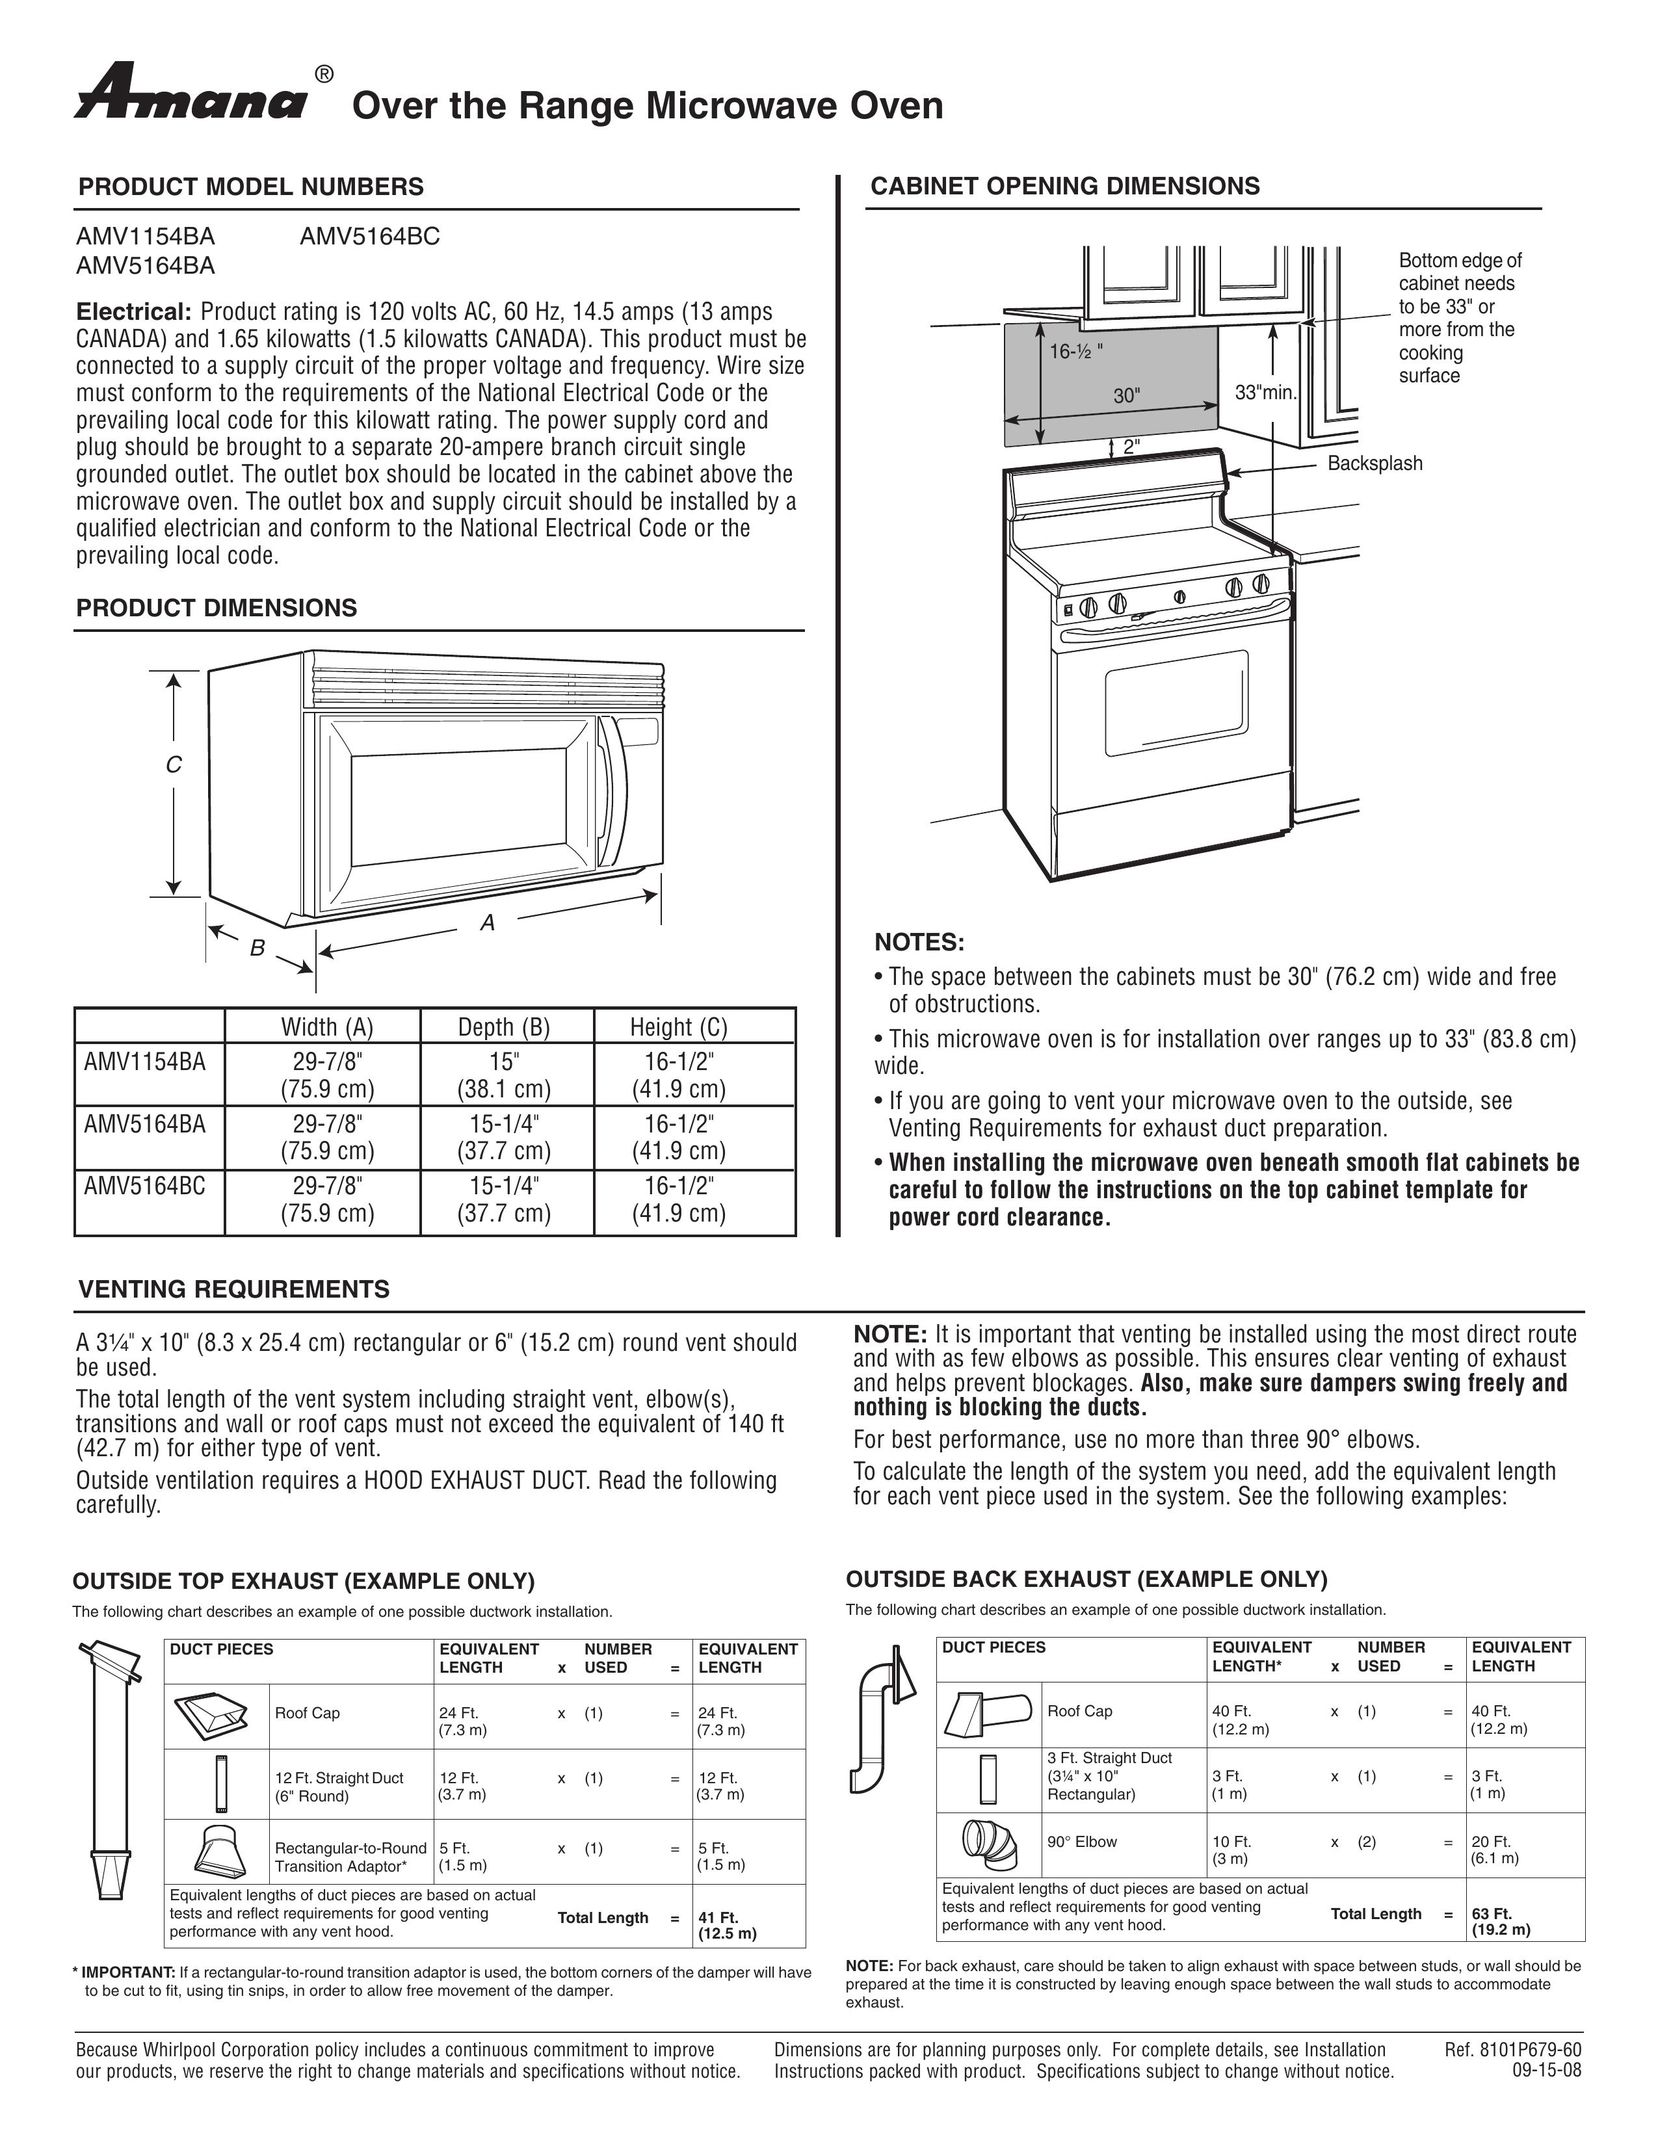 Amana AMV5164BA Microwave Oven User Manual